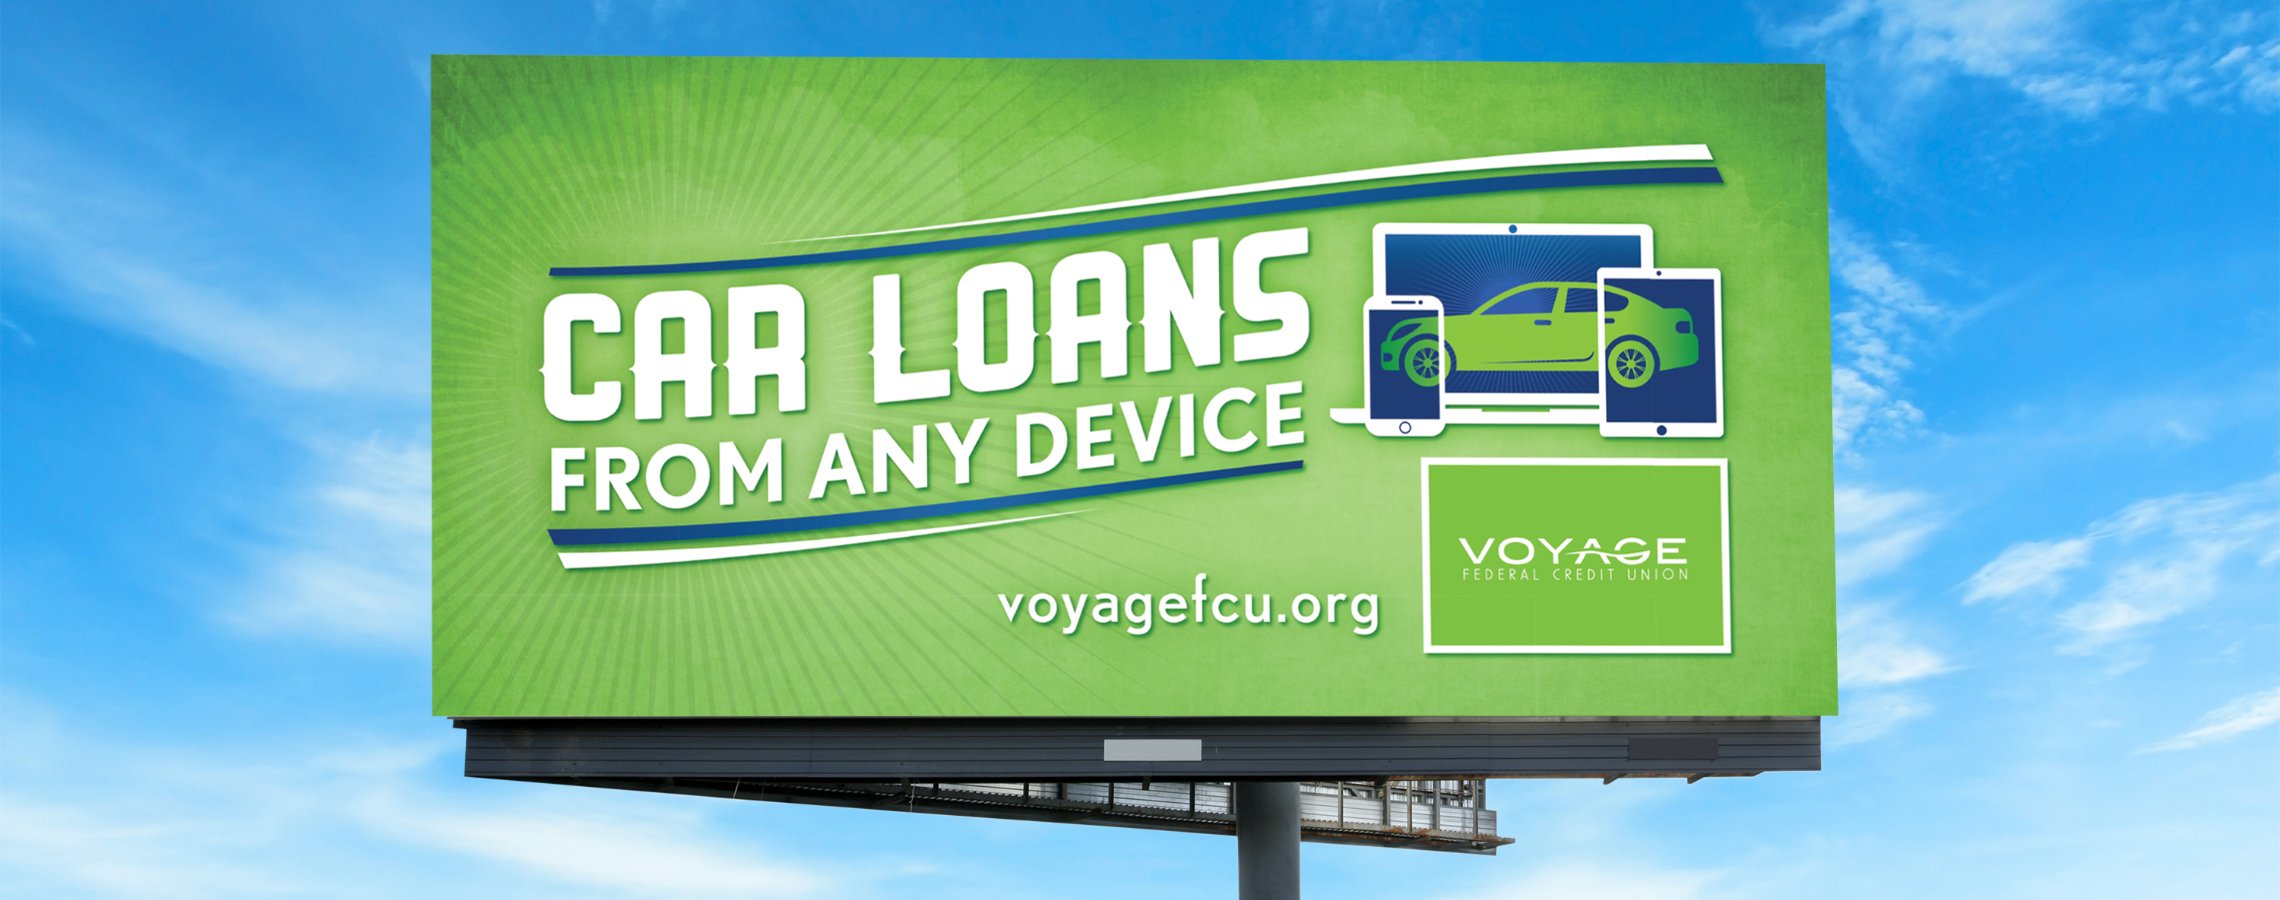 Voyage Federal Credit Union